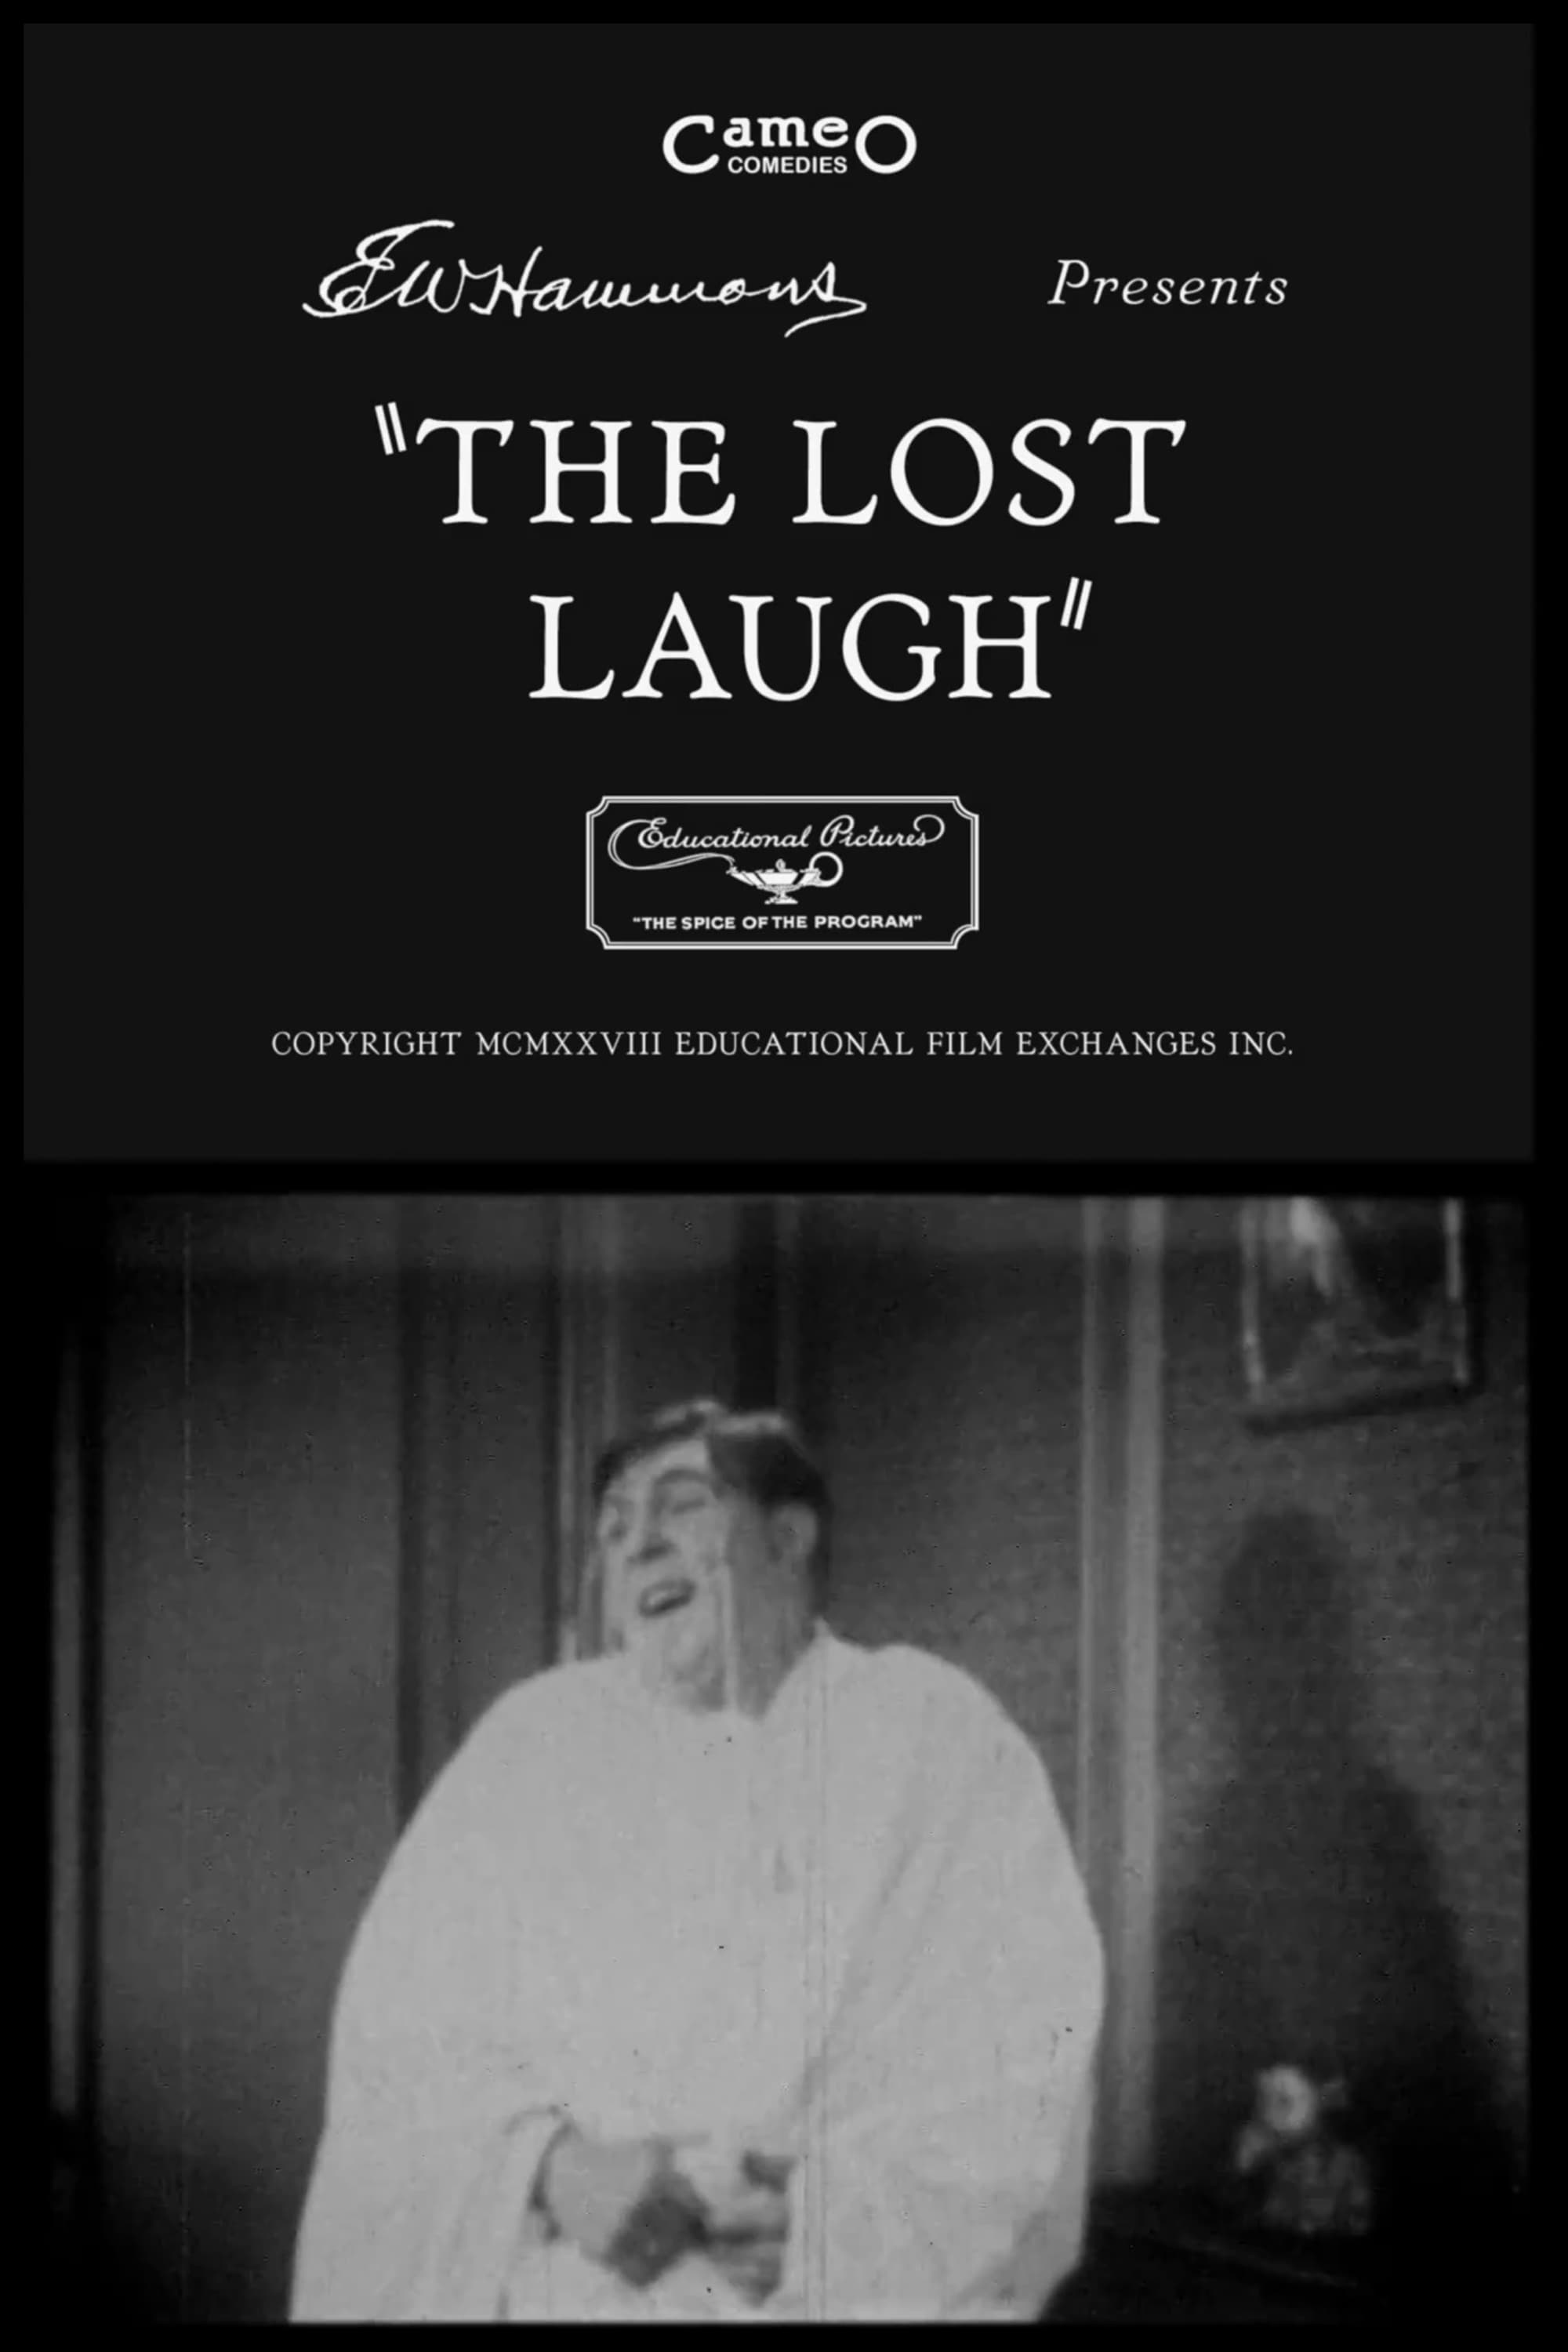 The Lost Laugh